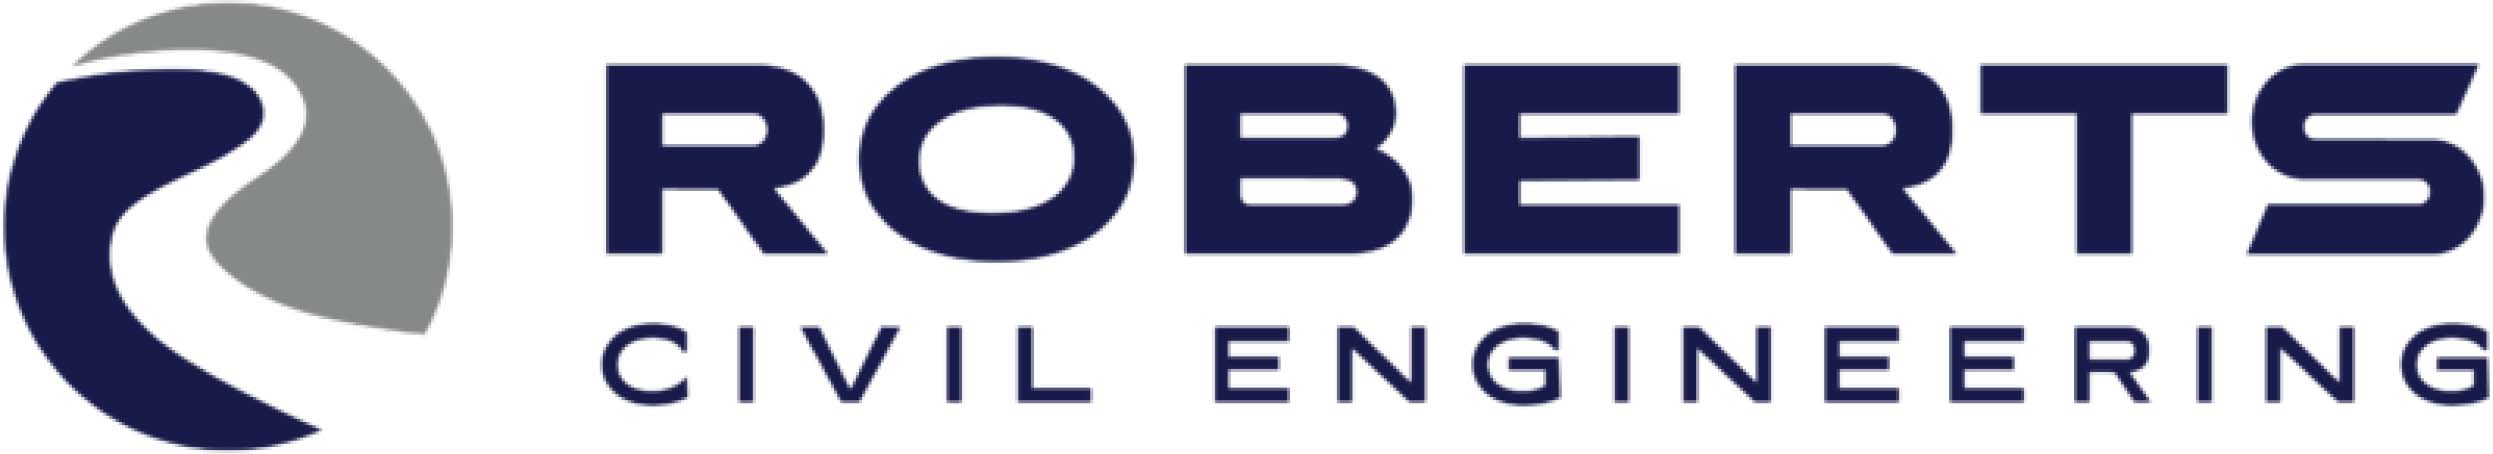 Roberts Civil Engineering logo